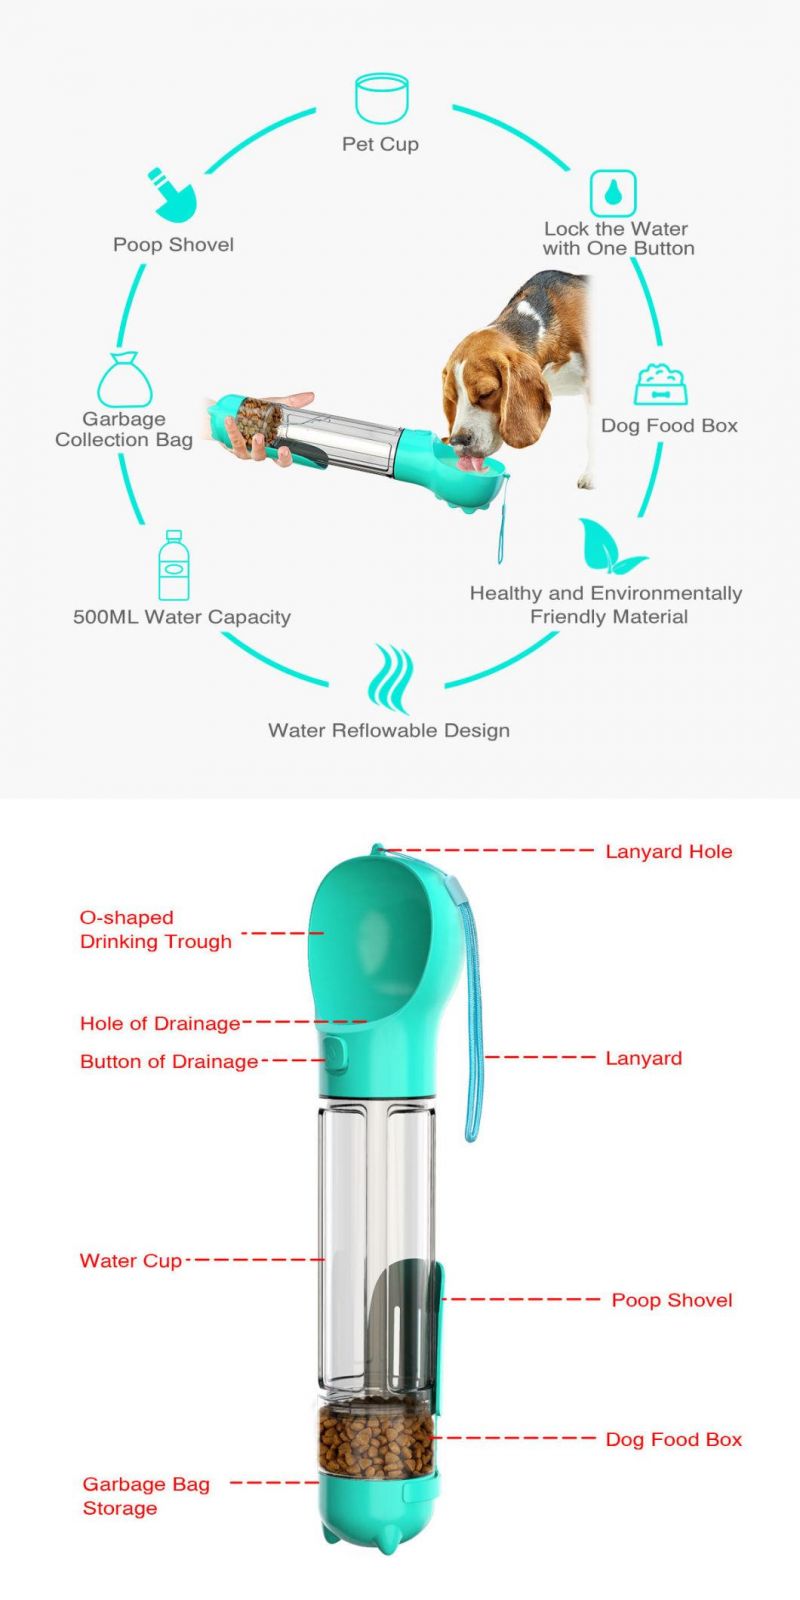 Multifunctional Portable Pet Water Bottle